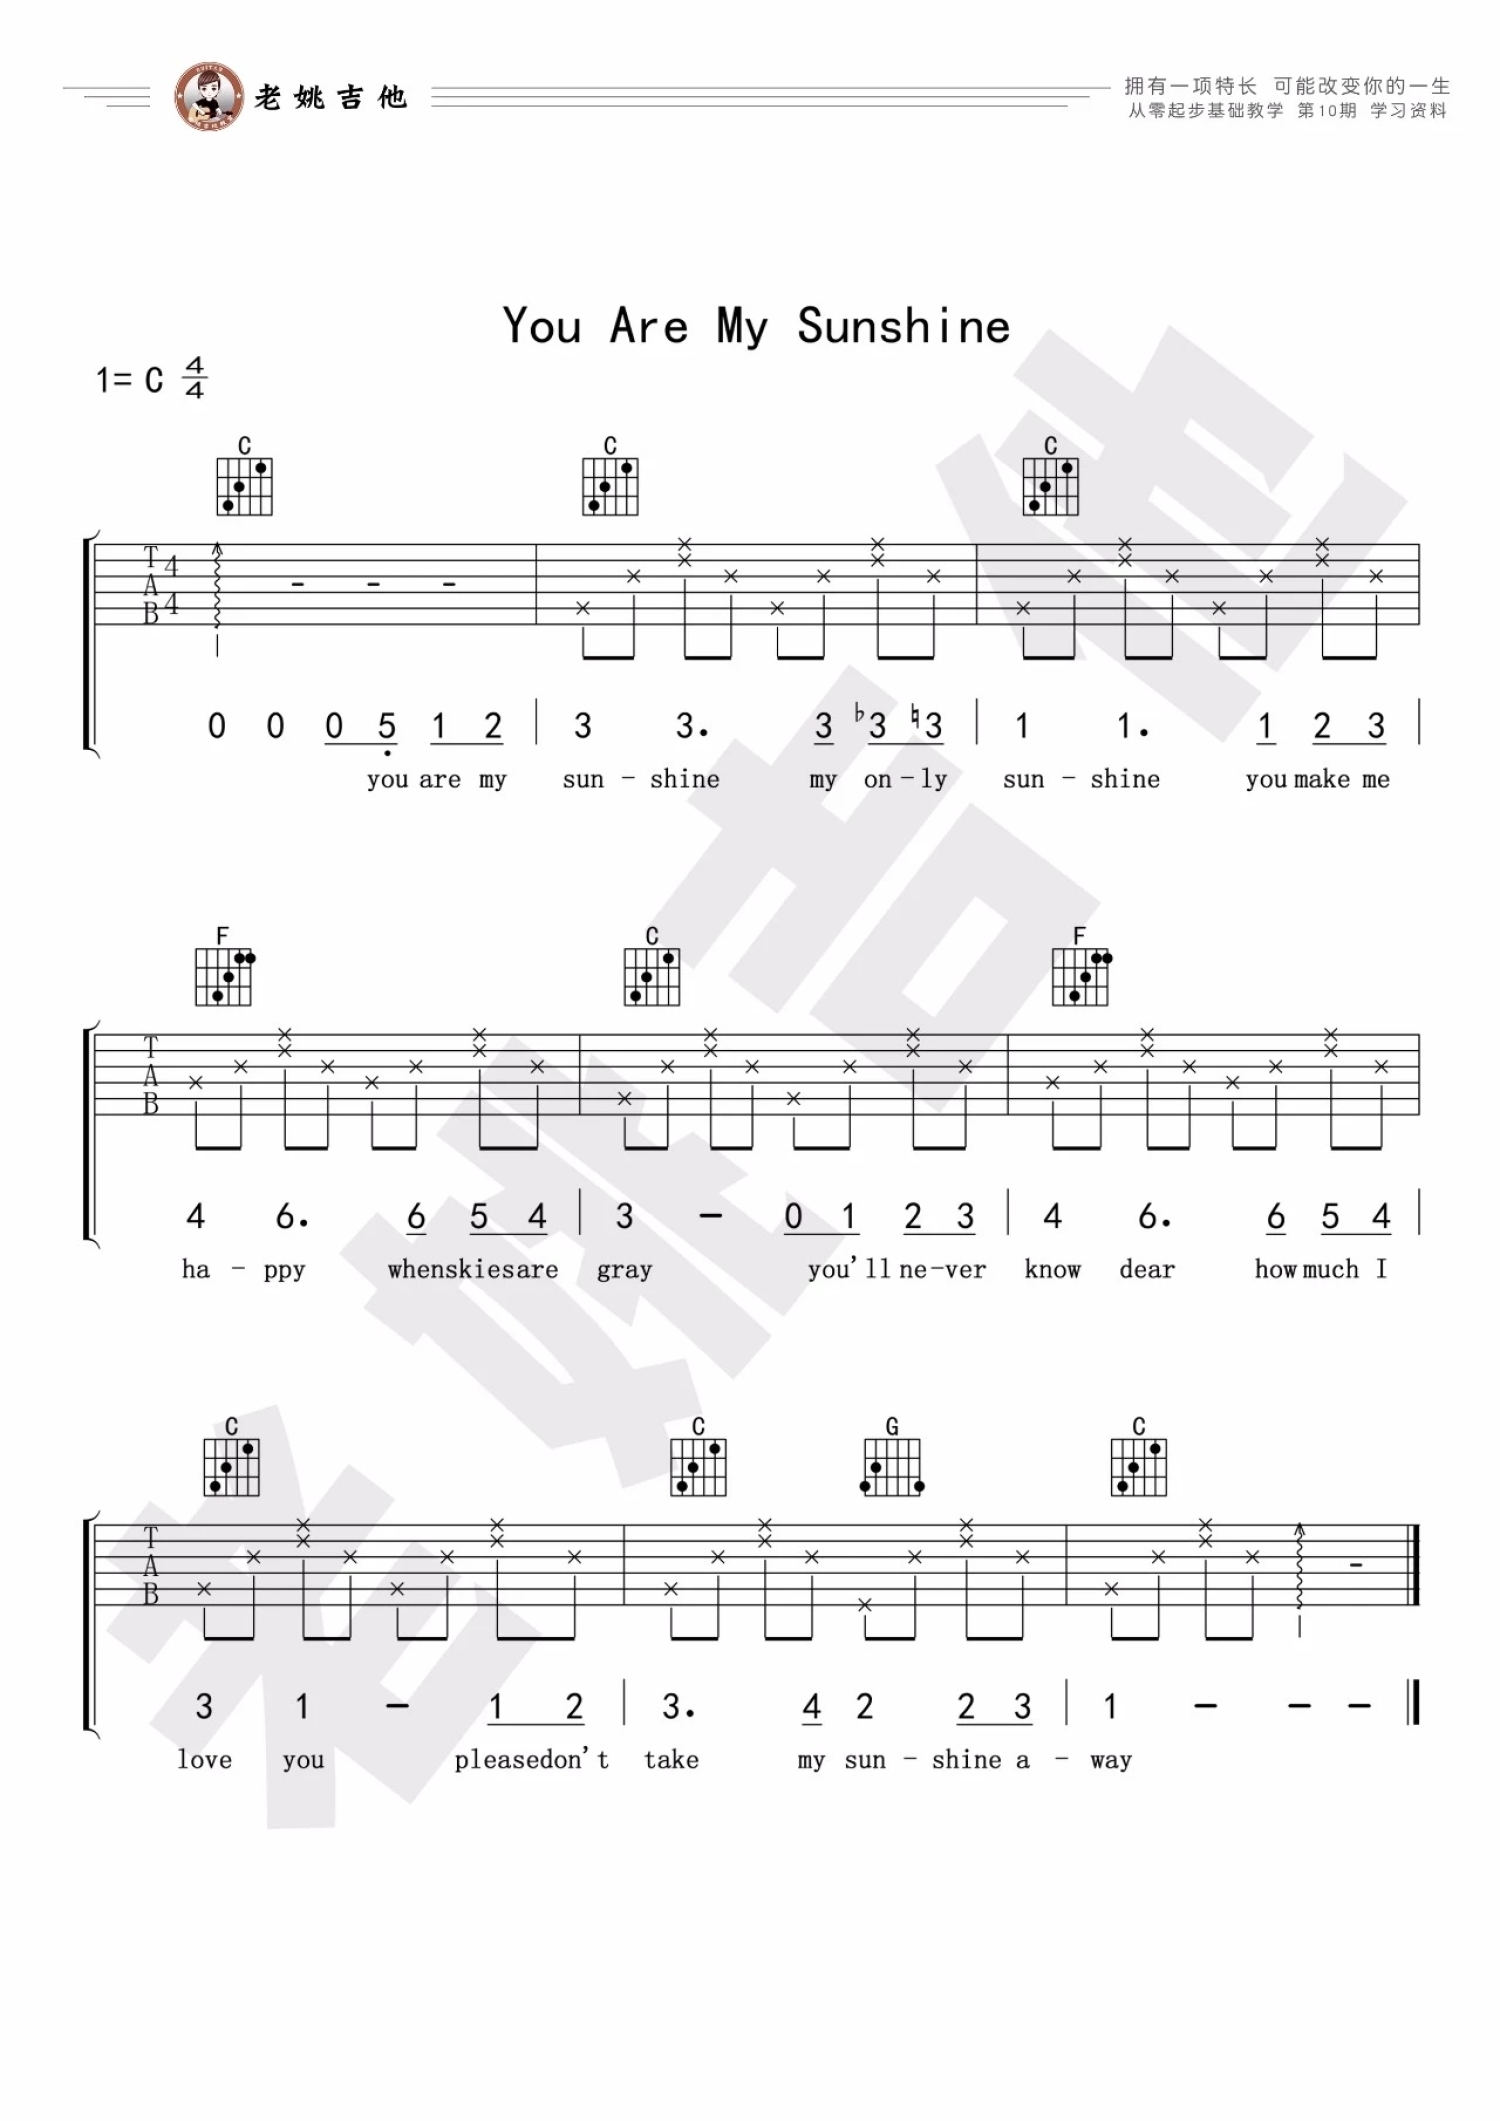 My Sunshine吉他谱 - 张杰 - G调吉他弹唱谱 - 和弦谱 - 琴谱网